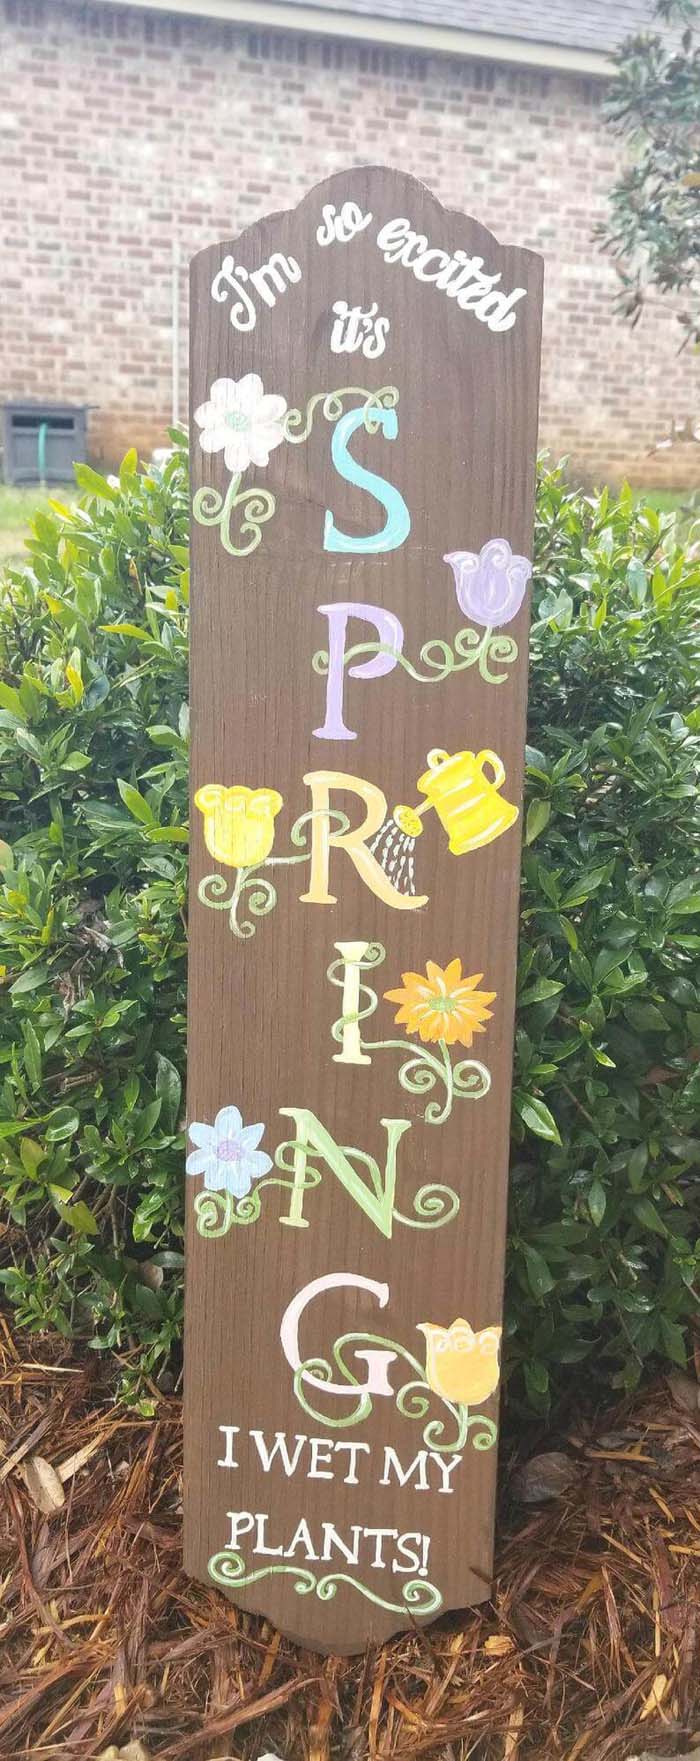 A Unique and Hilarious Spring Welcome Sign #spring #garden #decorhomeideas